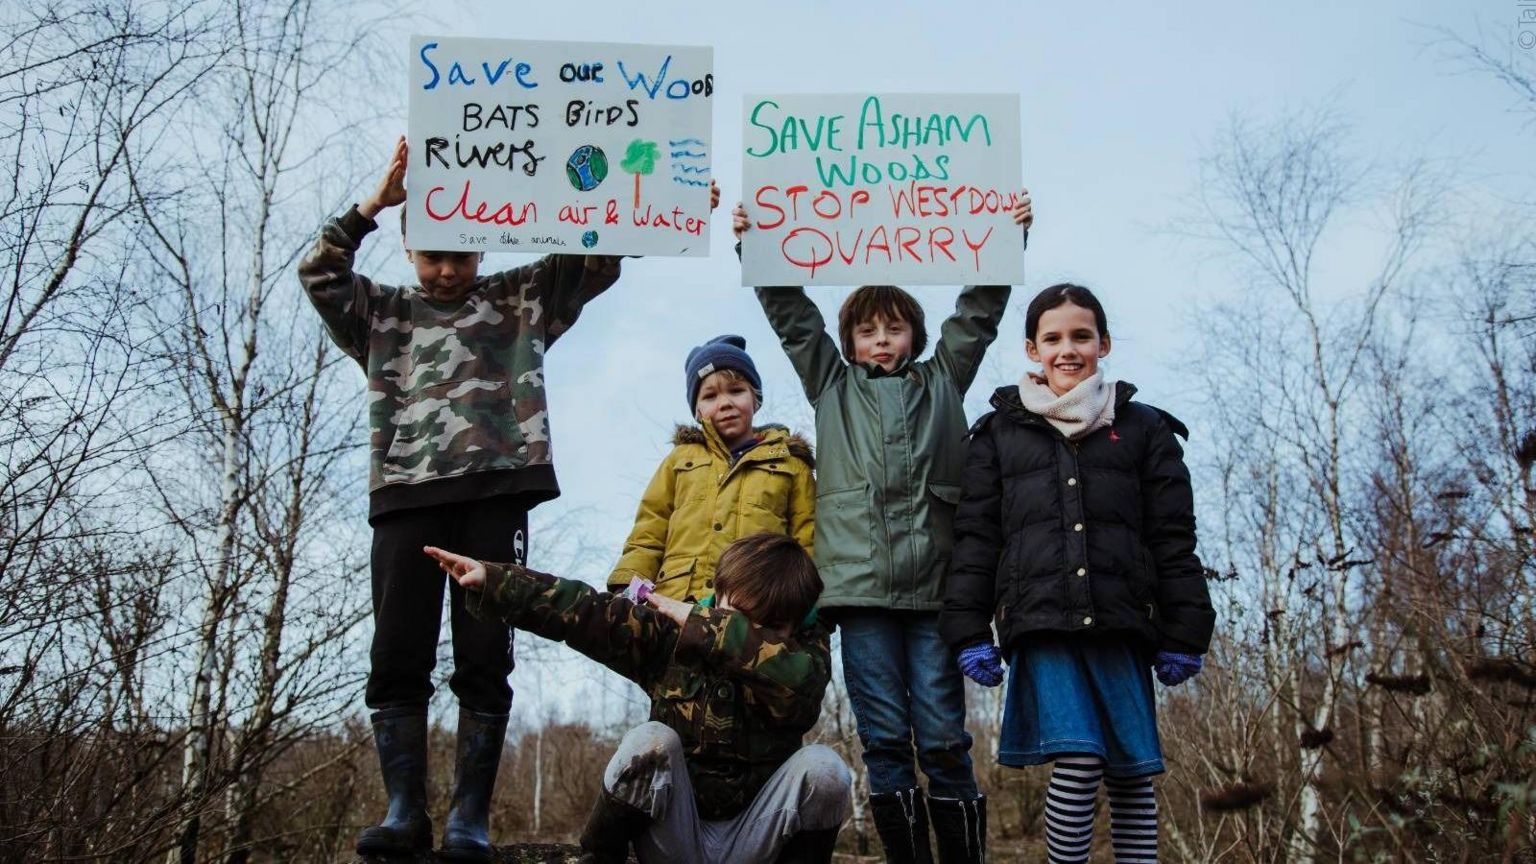 Five children hold protestor signs opposing Westdown Quarry